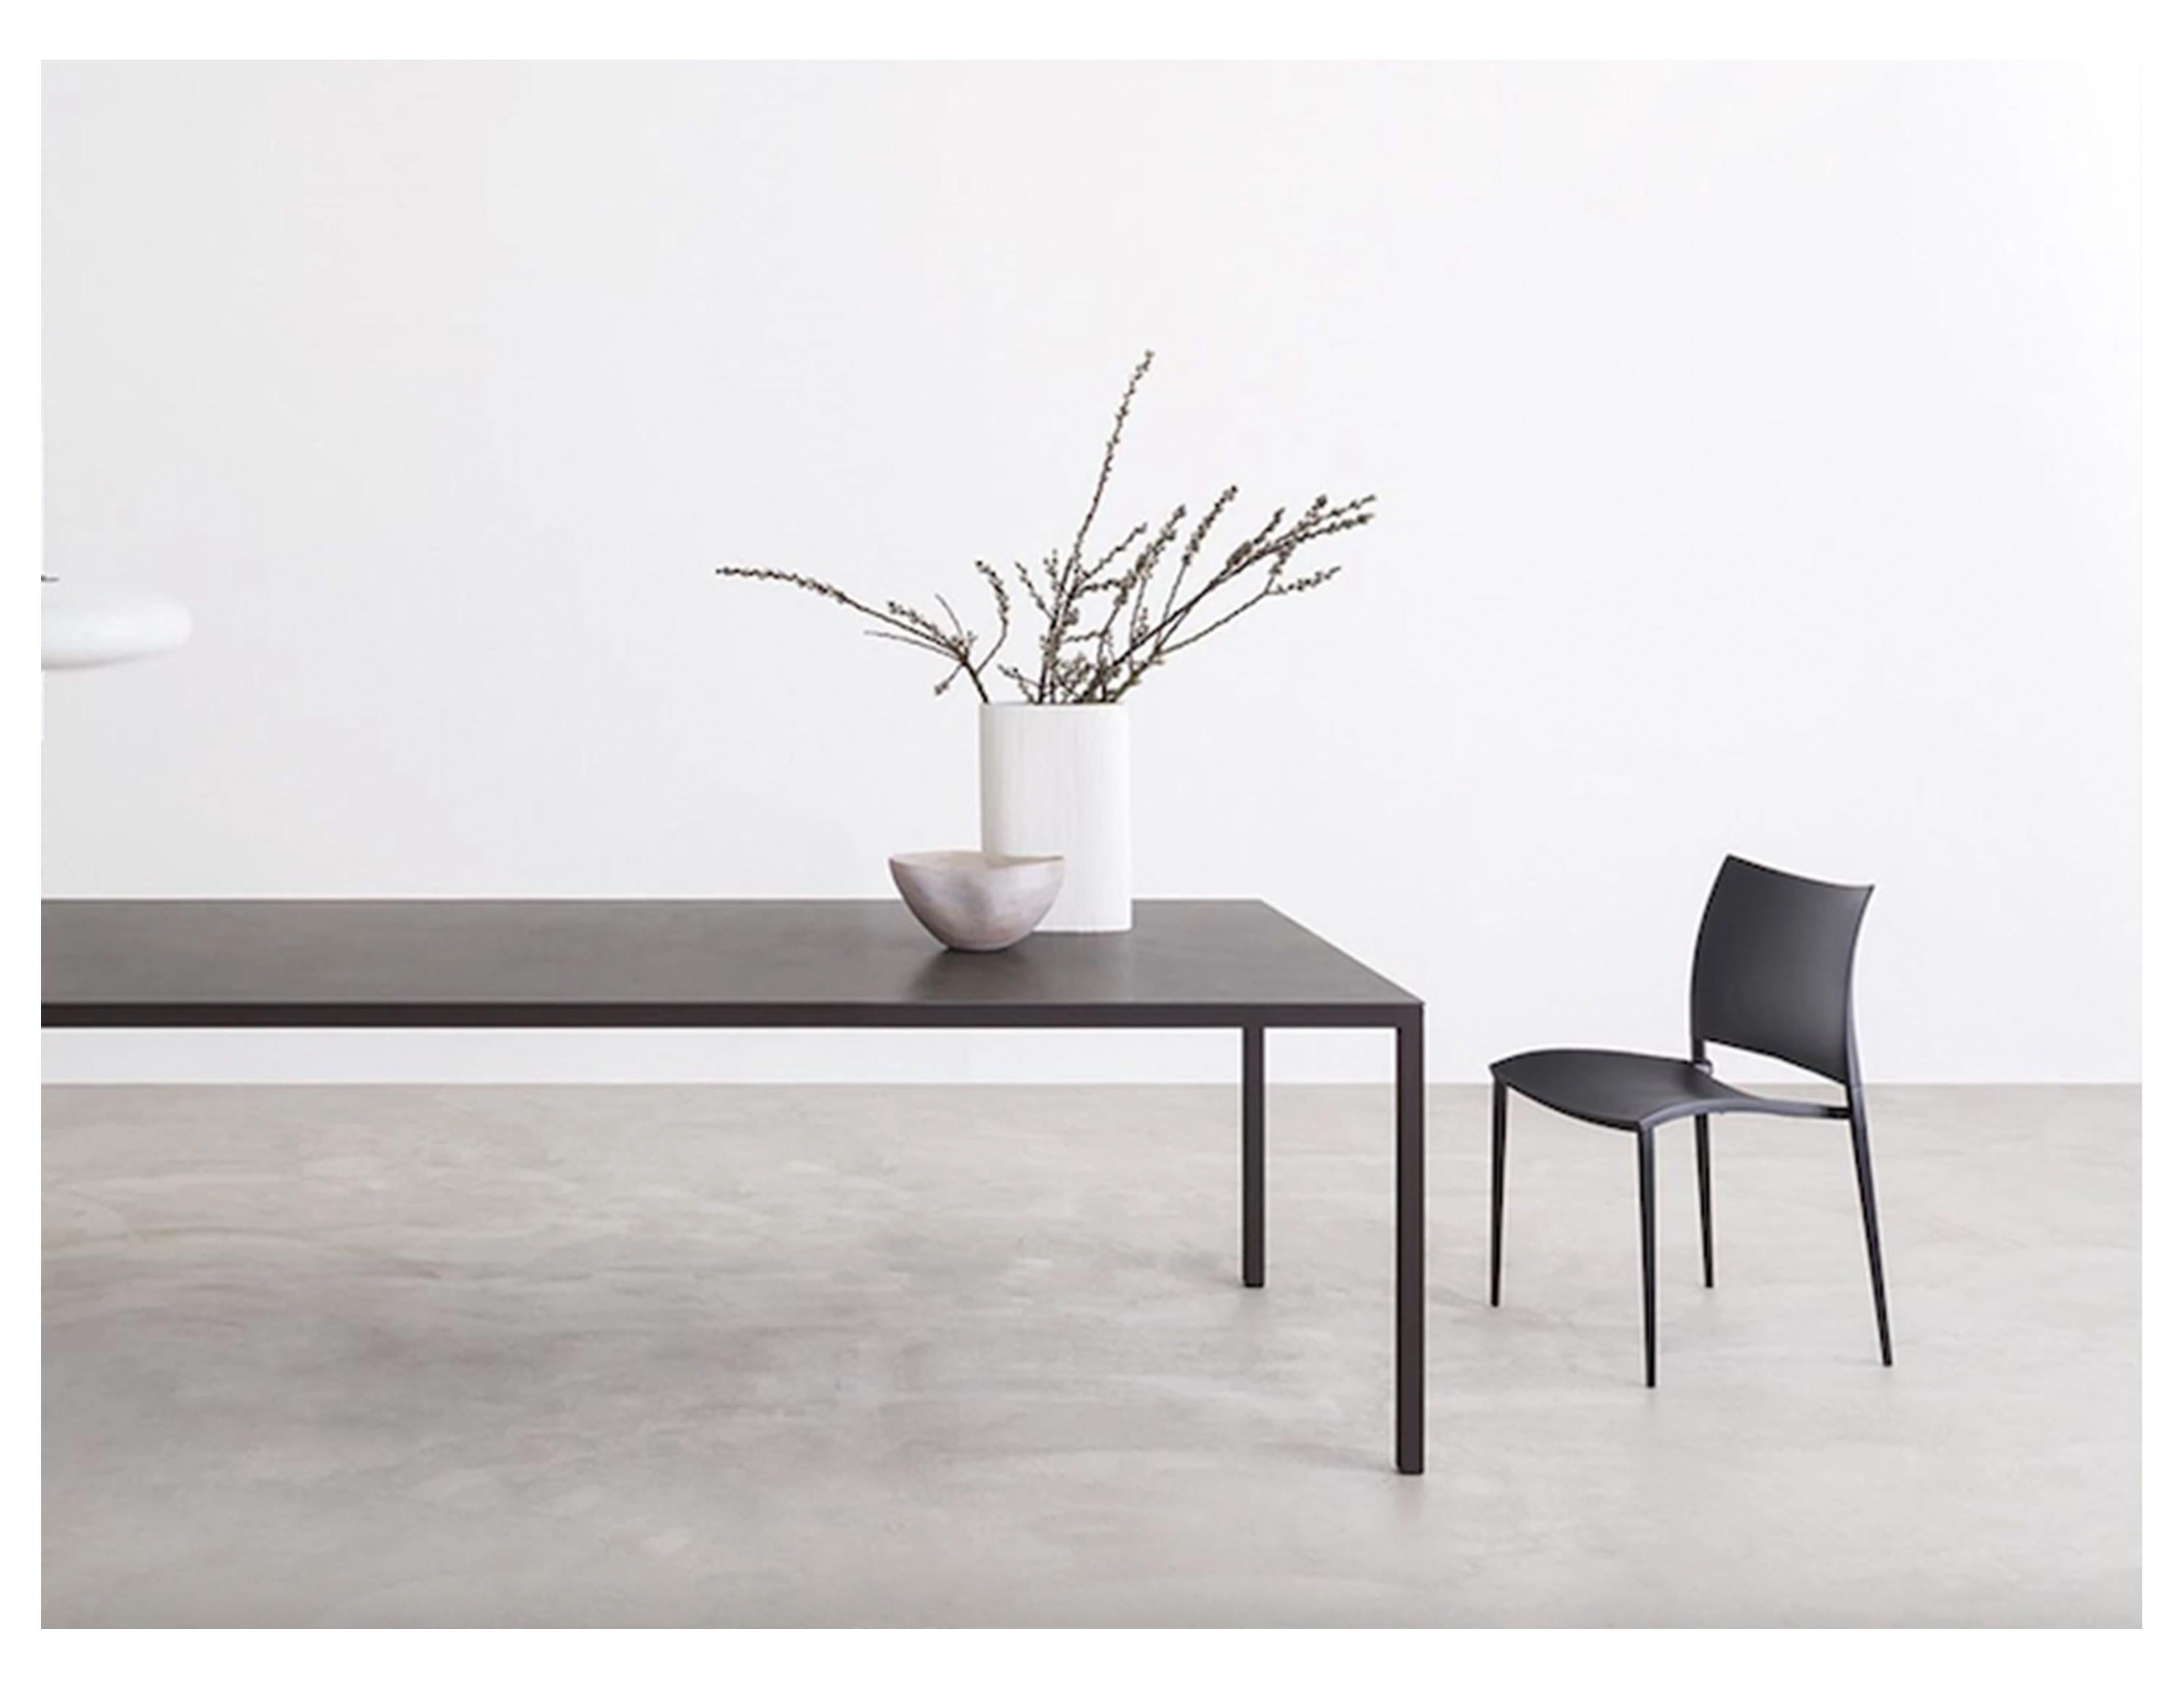 Customizable Desalto Helsinki 35 Home Ceramic Top Table by Caronni + Bonanomi For Sale 4